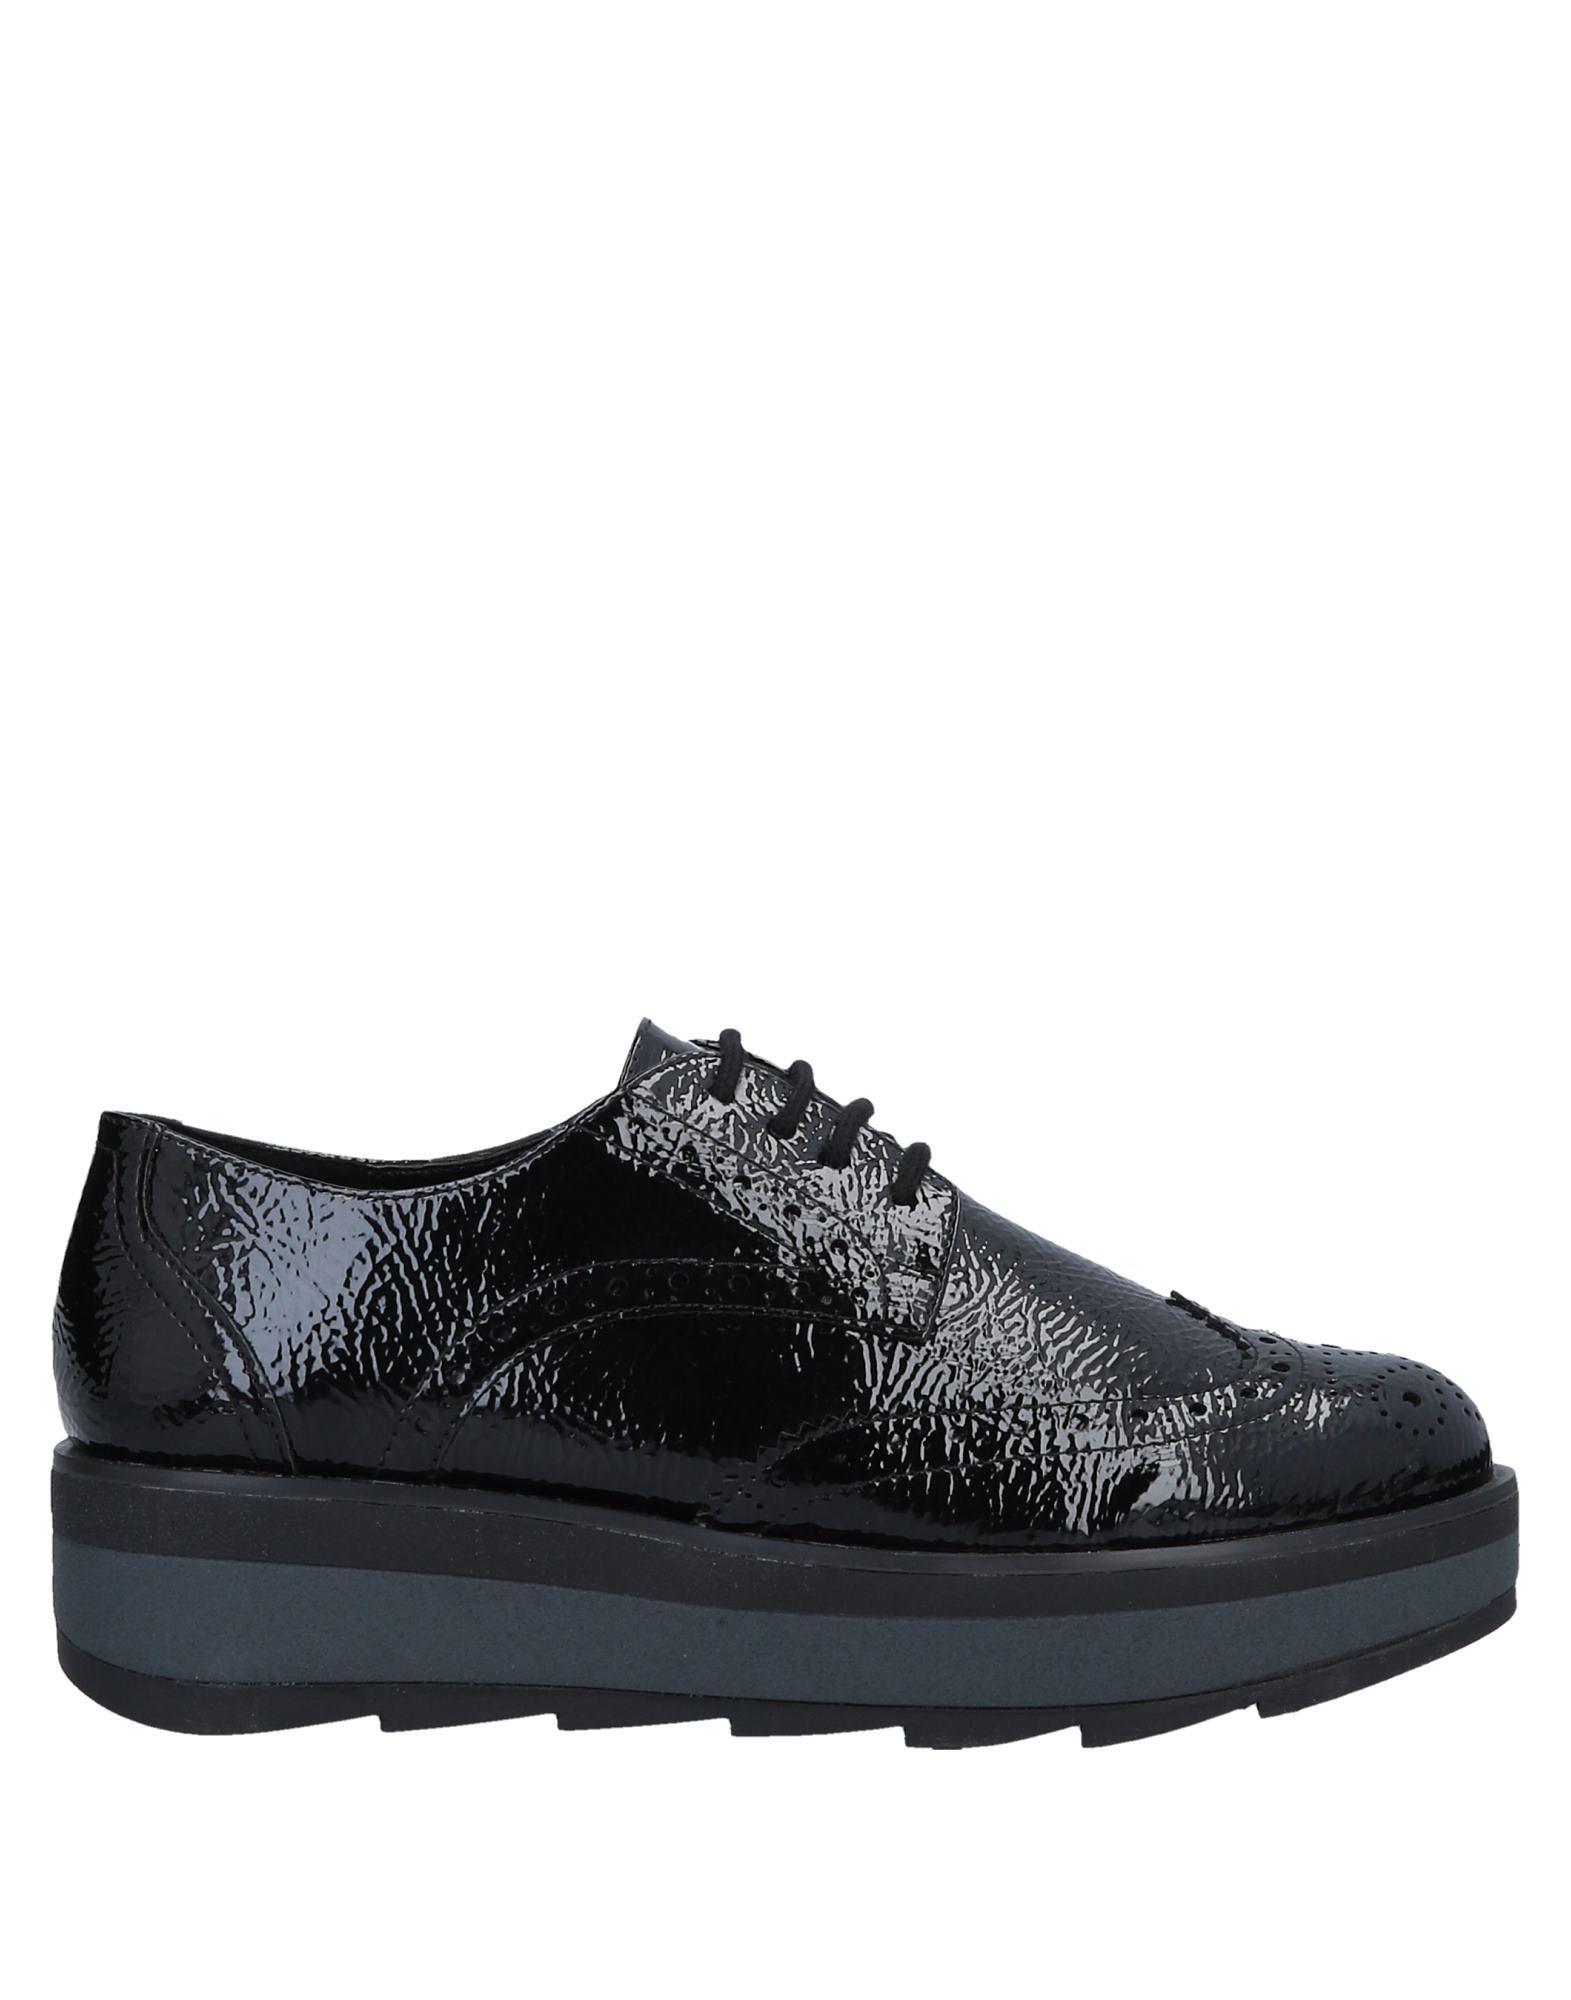 Lumberjack Leather Lace-up Shoe in Black - Lyst